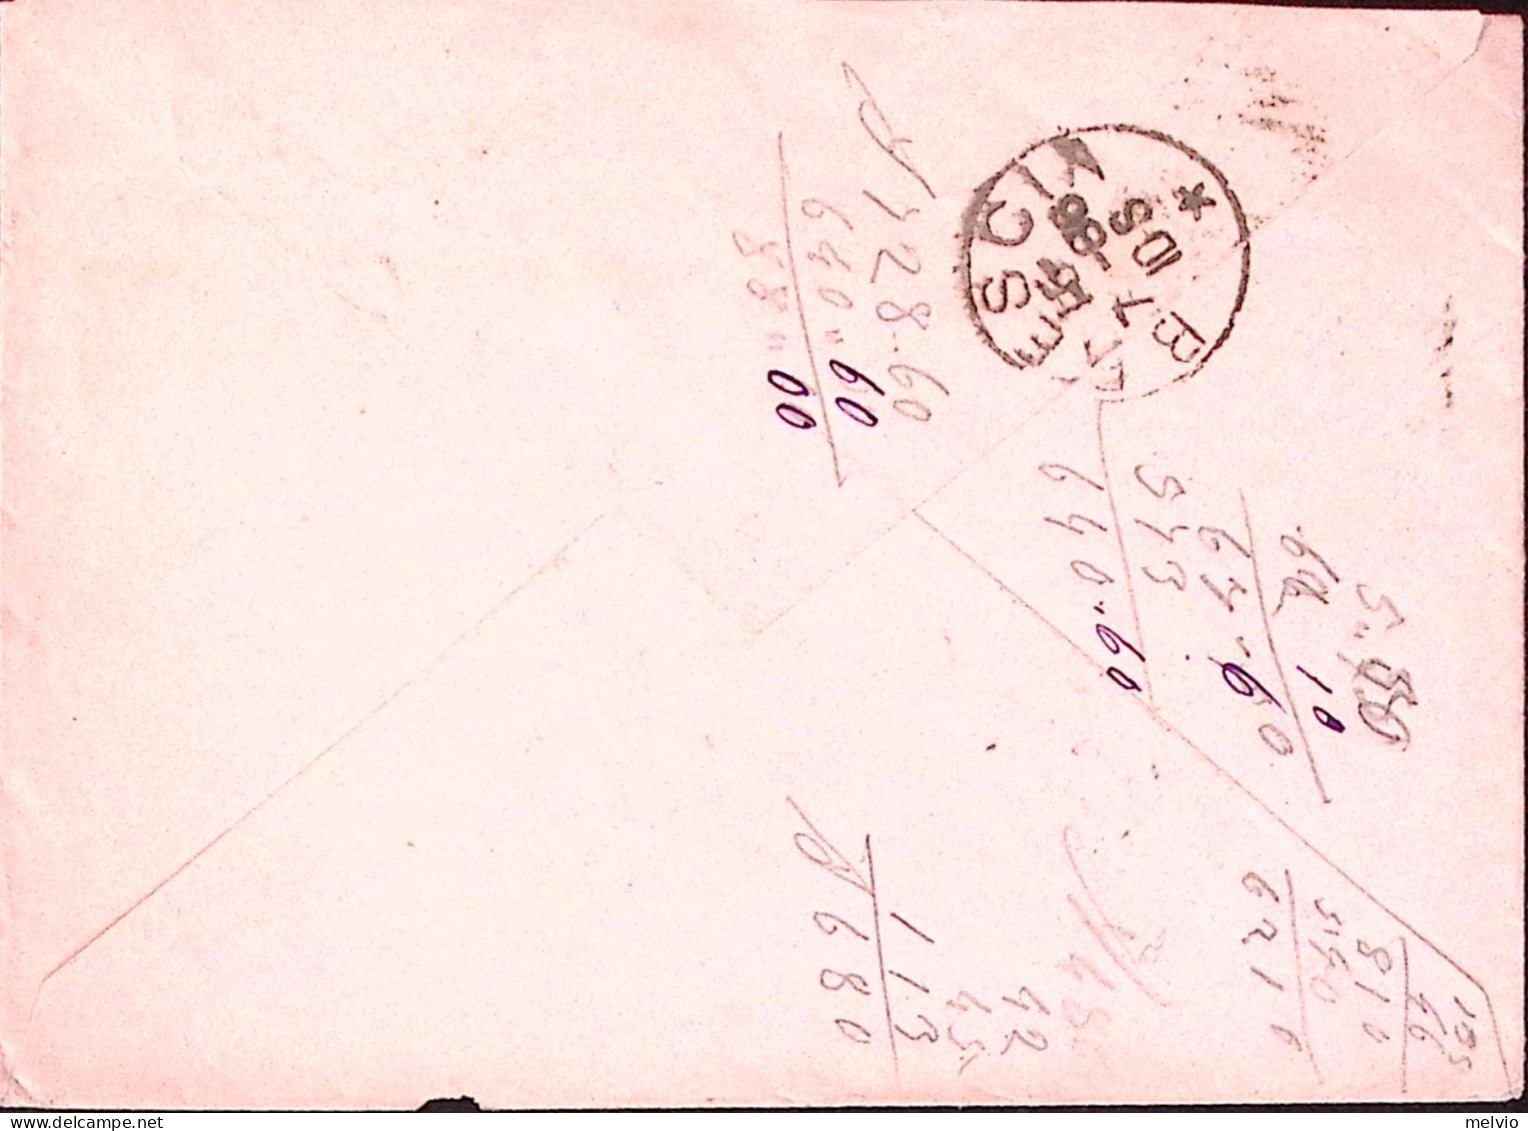 1886-BERGAMO ALTA C1+sbarre (15.7) Su Busta Affrancata Effigie C.20 - Storia Postale